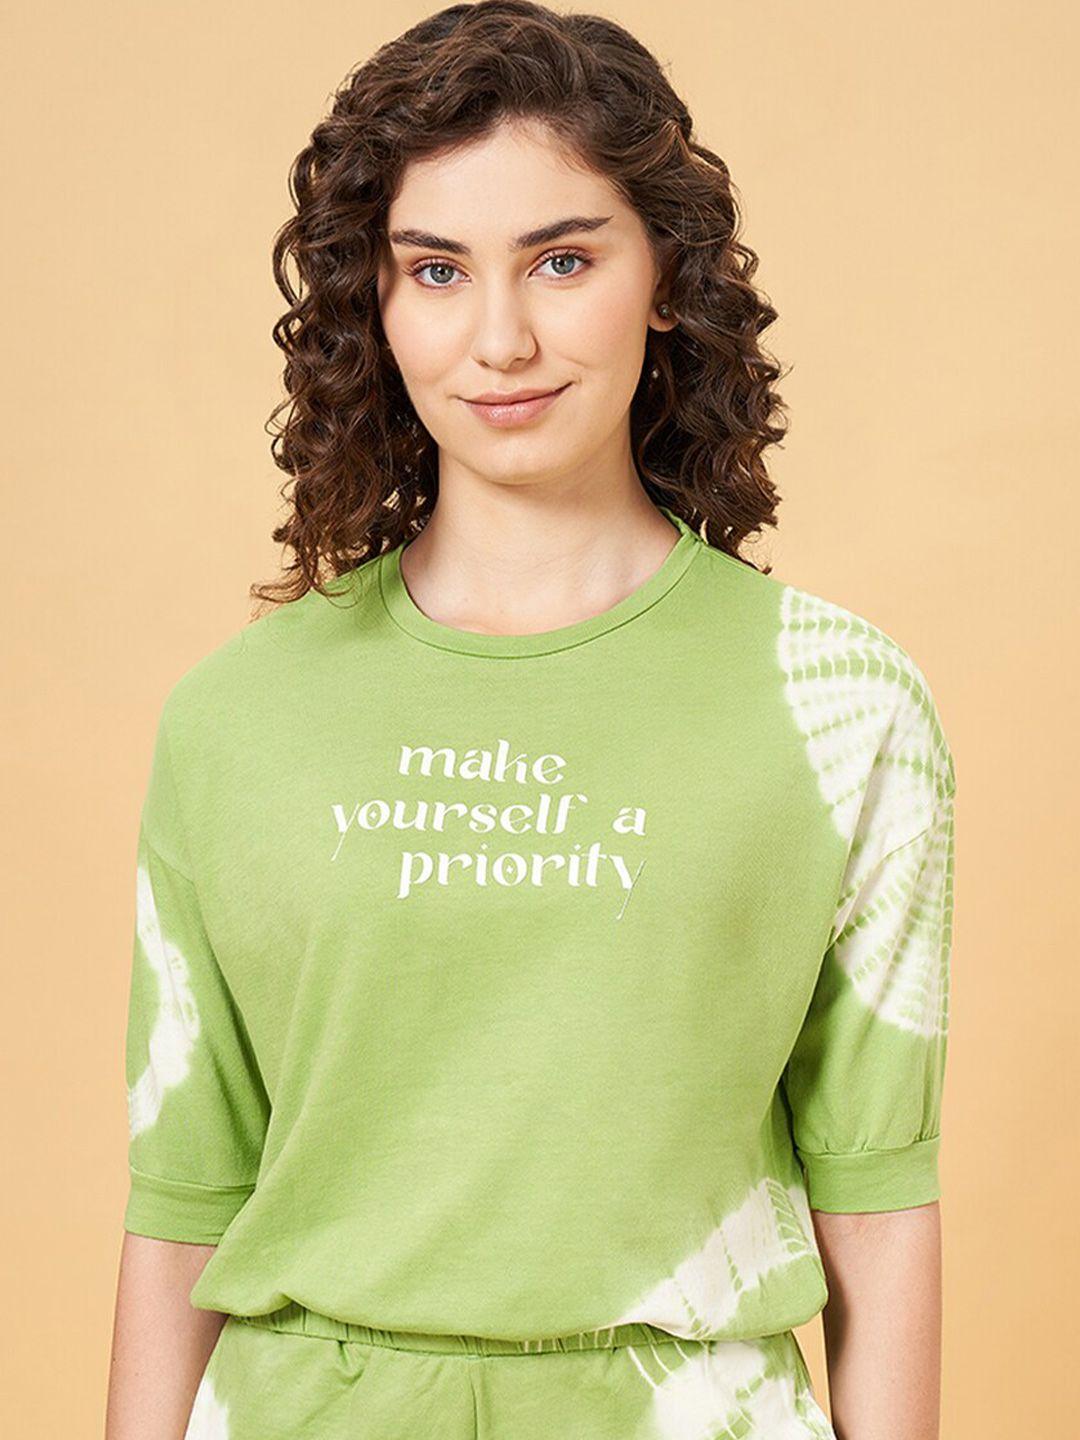 ajile-by-pantaloons-women-typography-t-shirt